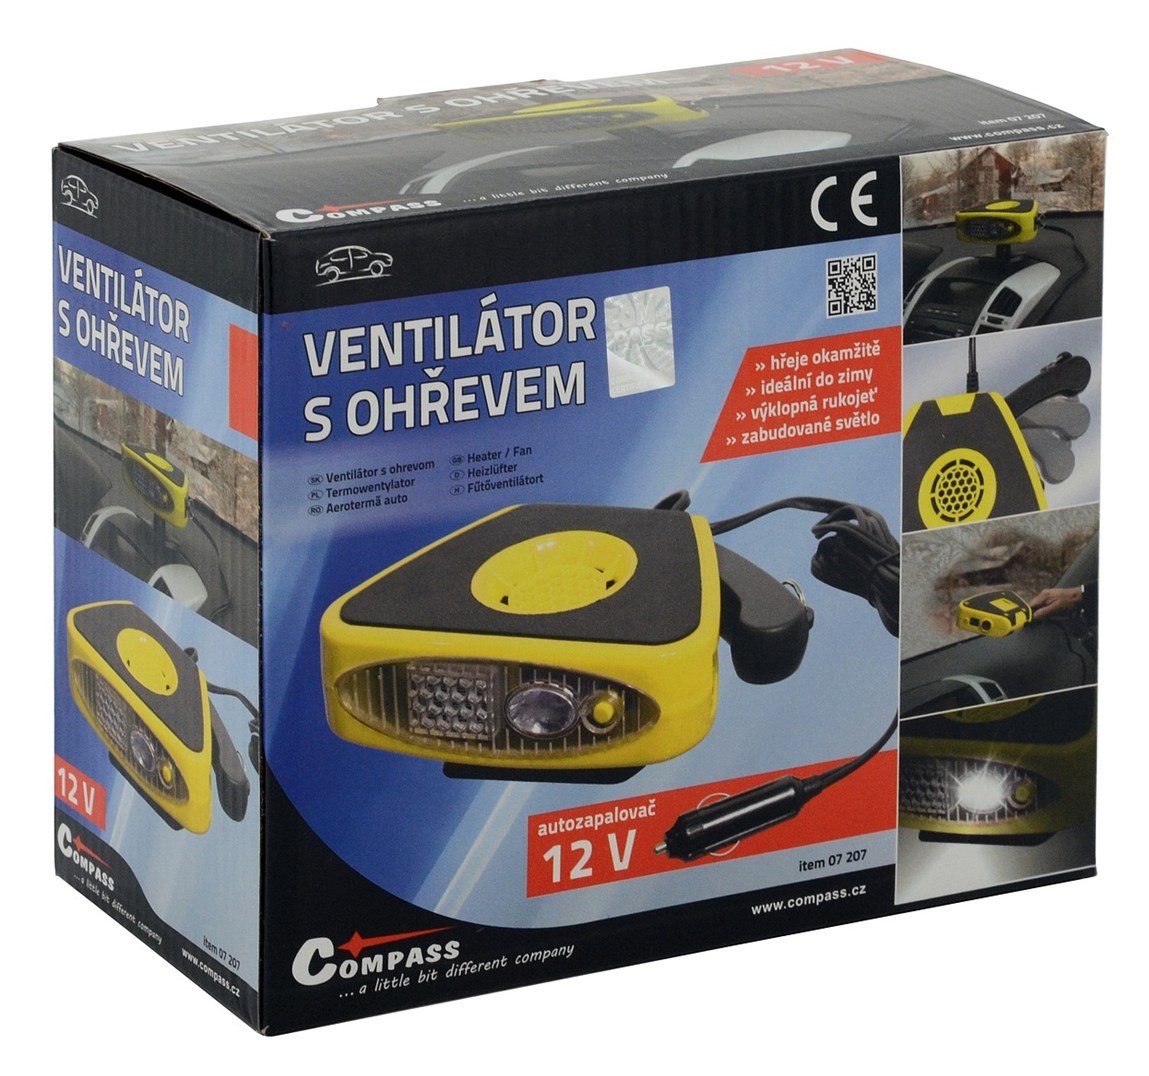 Ventilátor s ohřevem FROST 3in1 12V, 07207